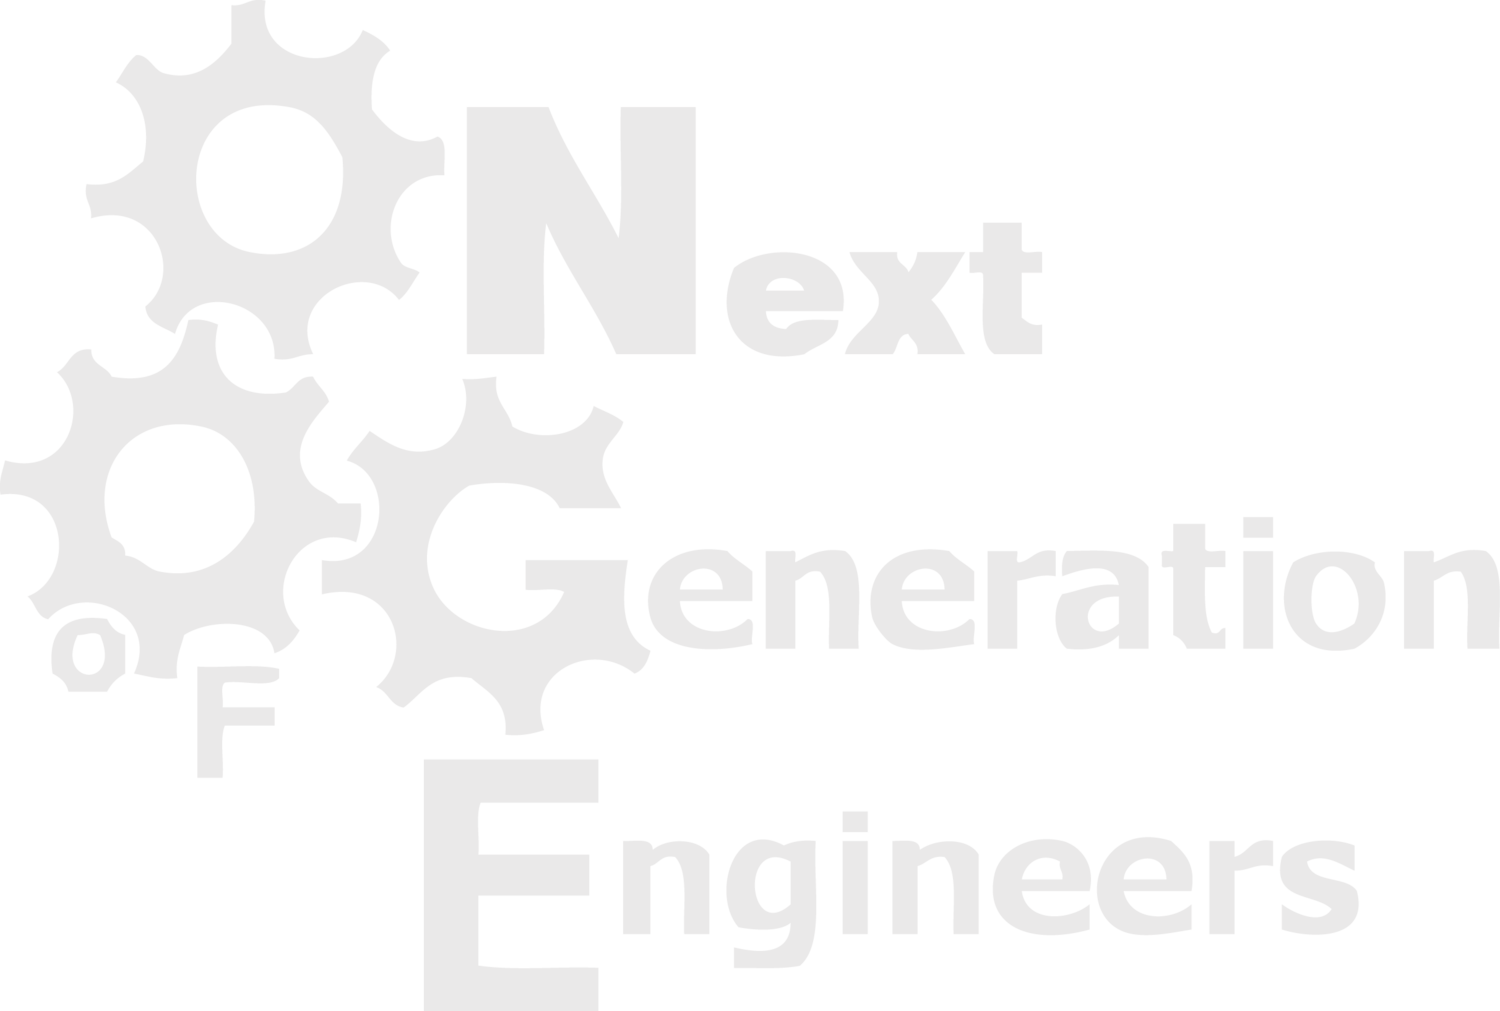 Next Generation of Engineers